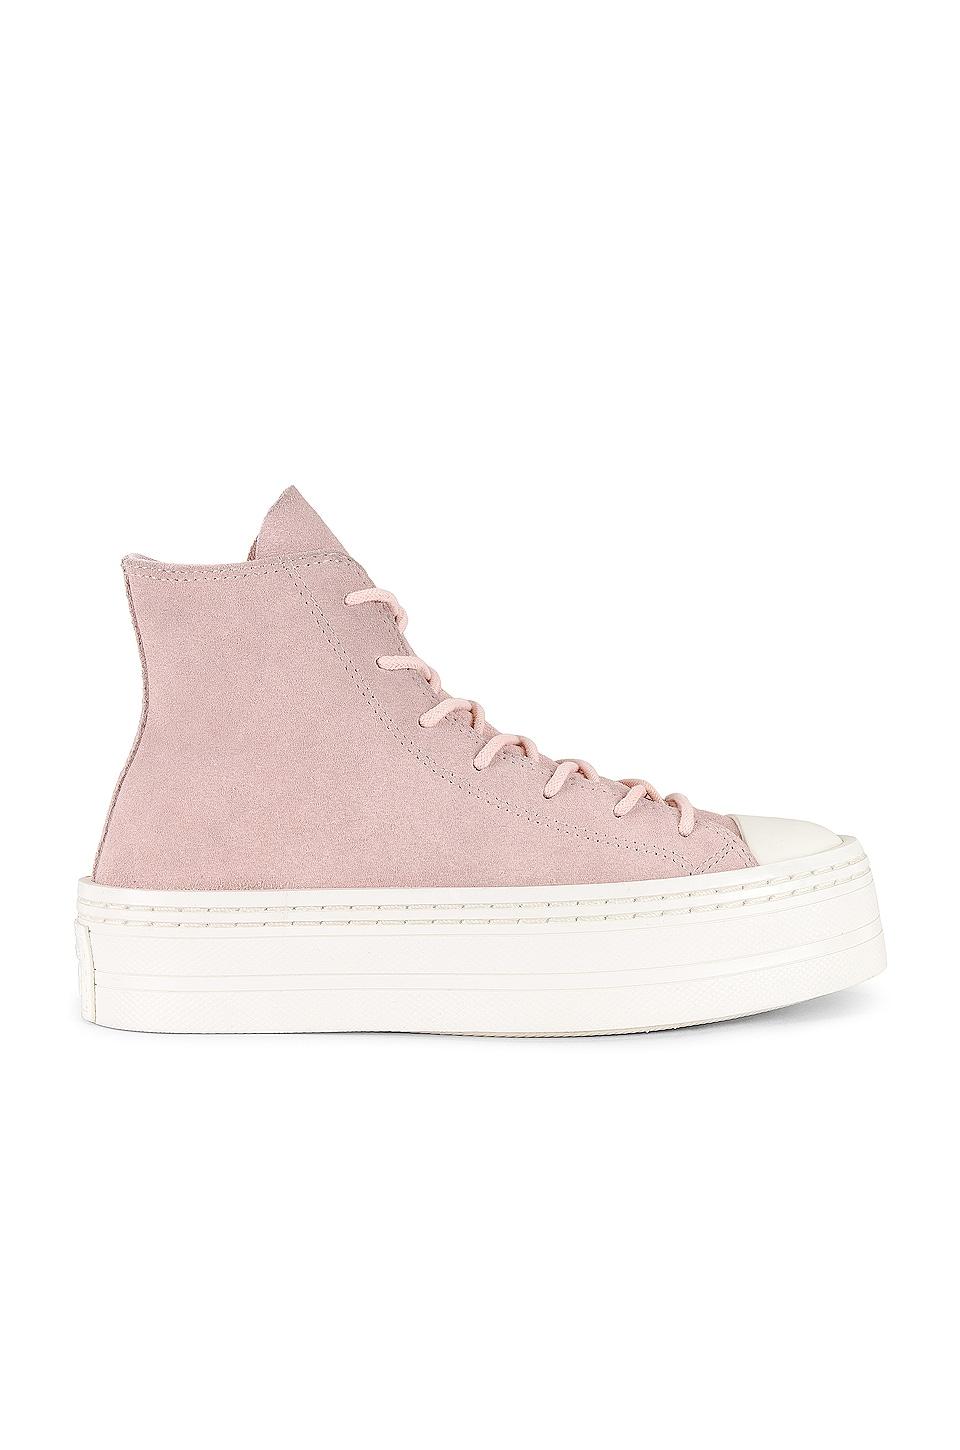 Converse Chuck Taylor All Star Modern Lift Platform Sneaker in Pink | Lyst